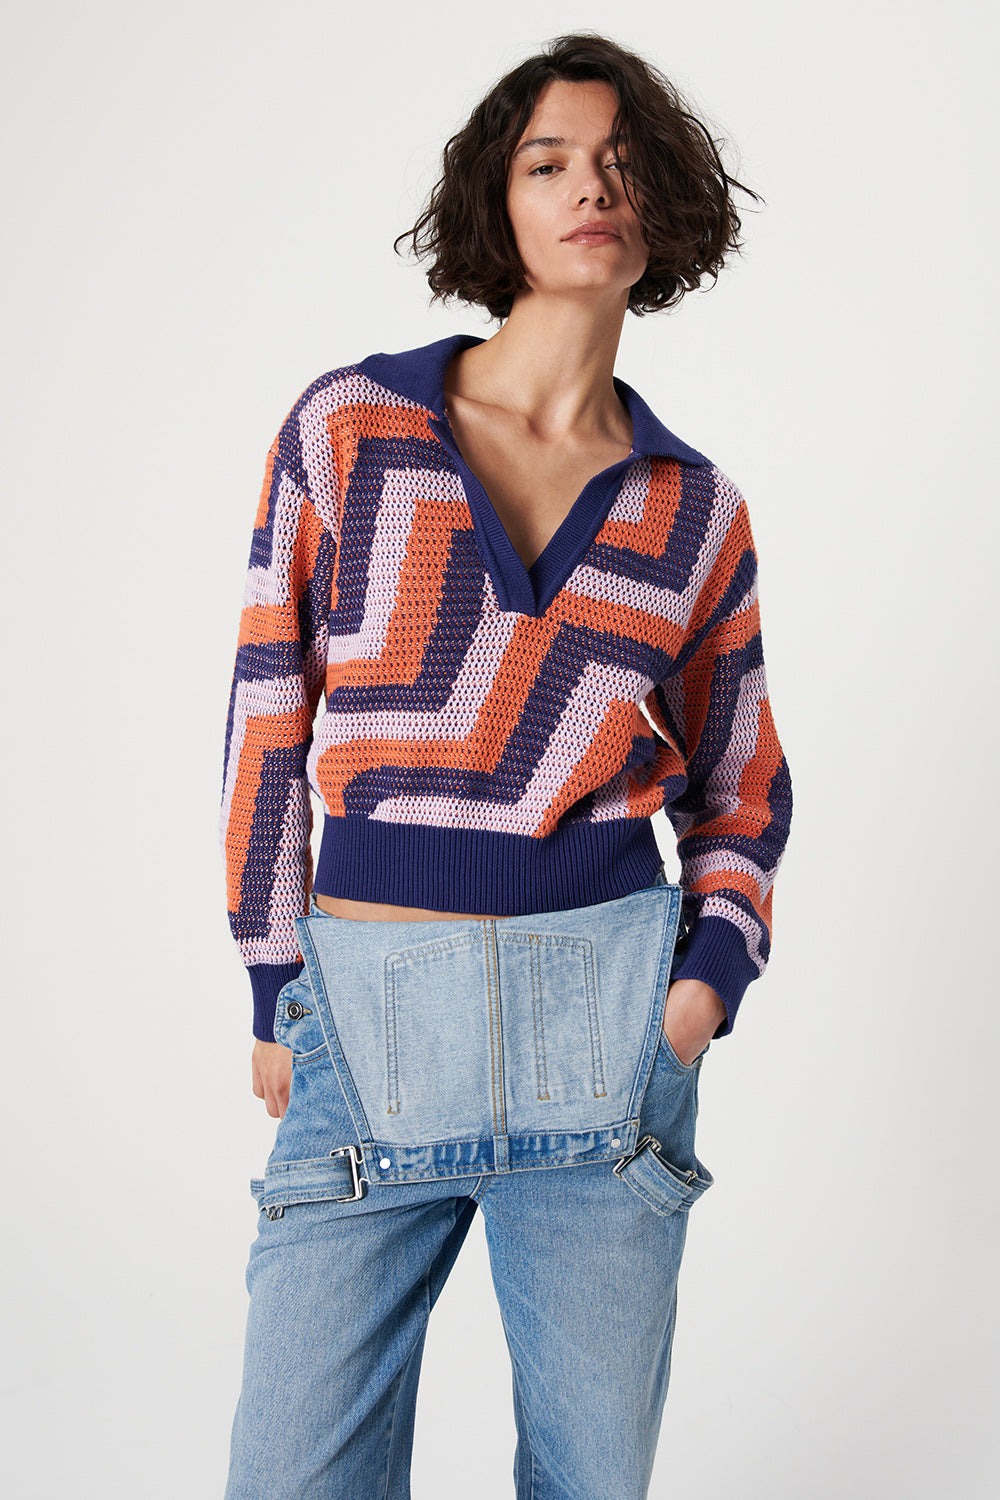 Rain Knitted Sweater